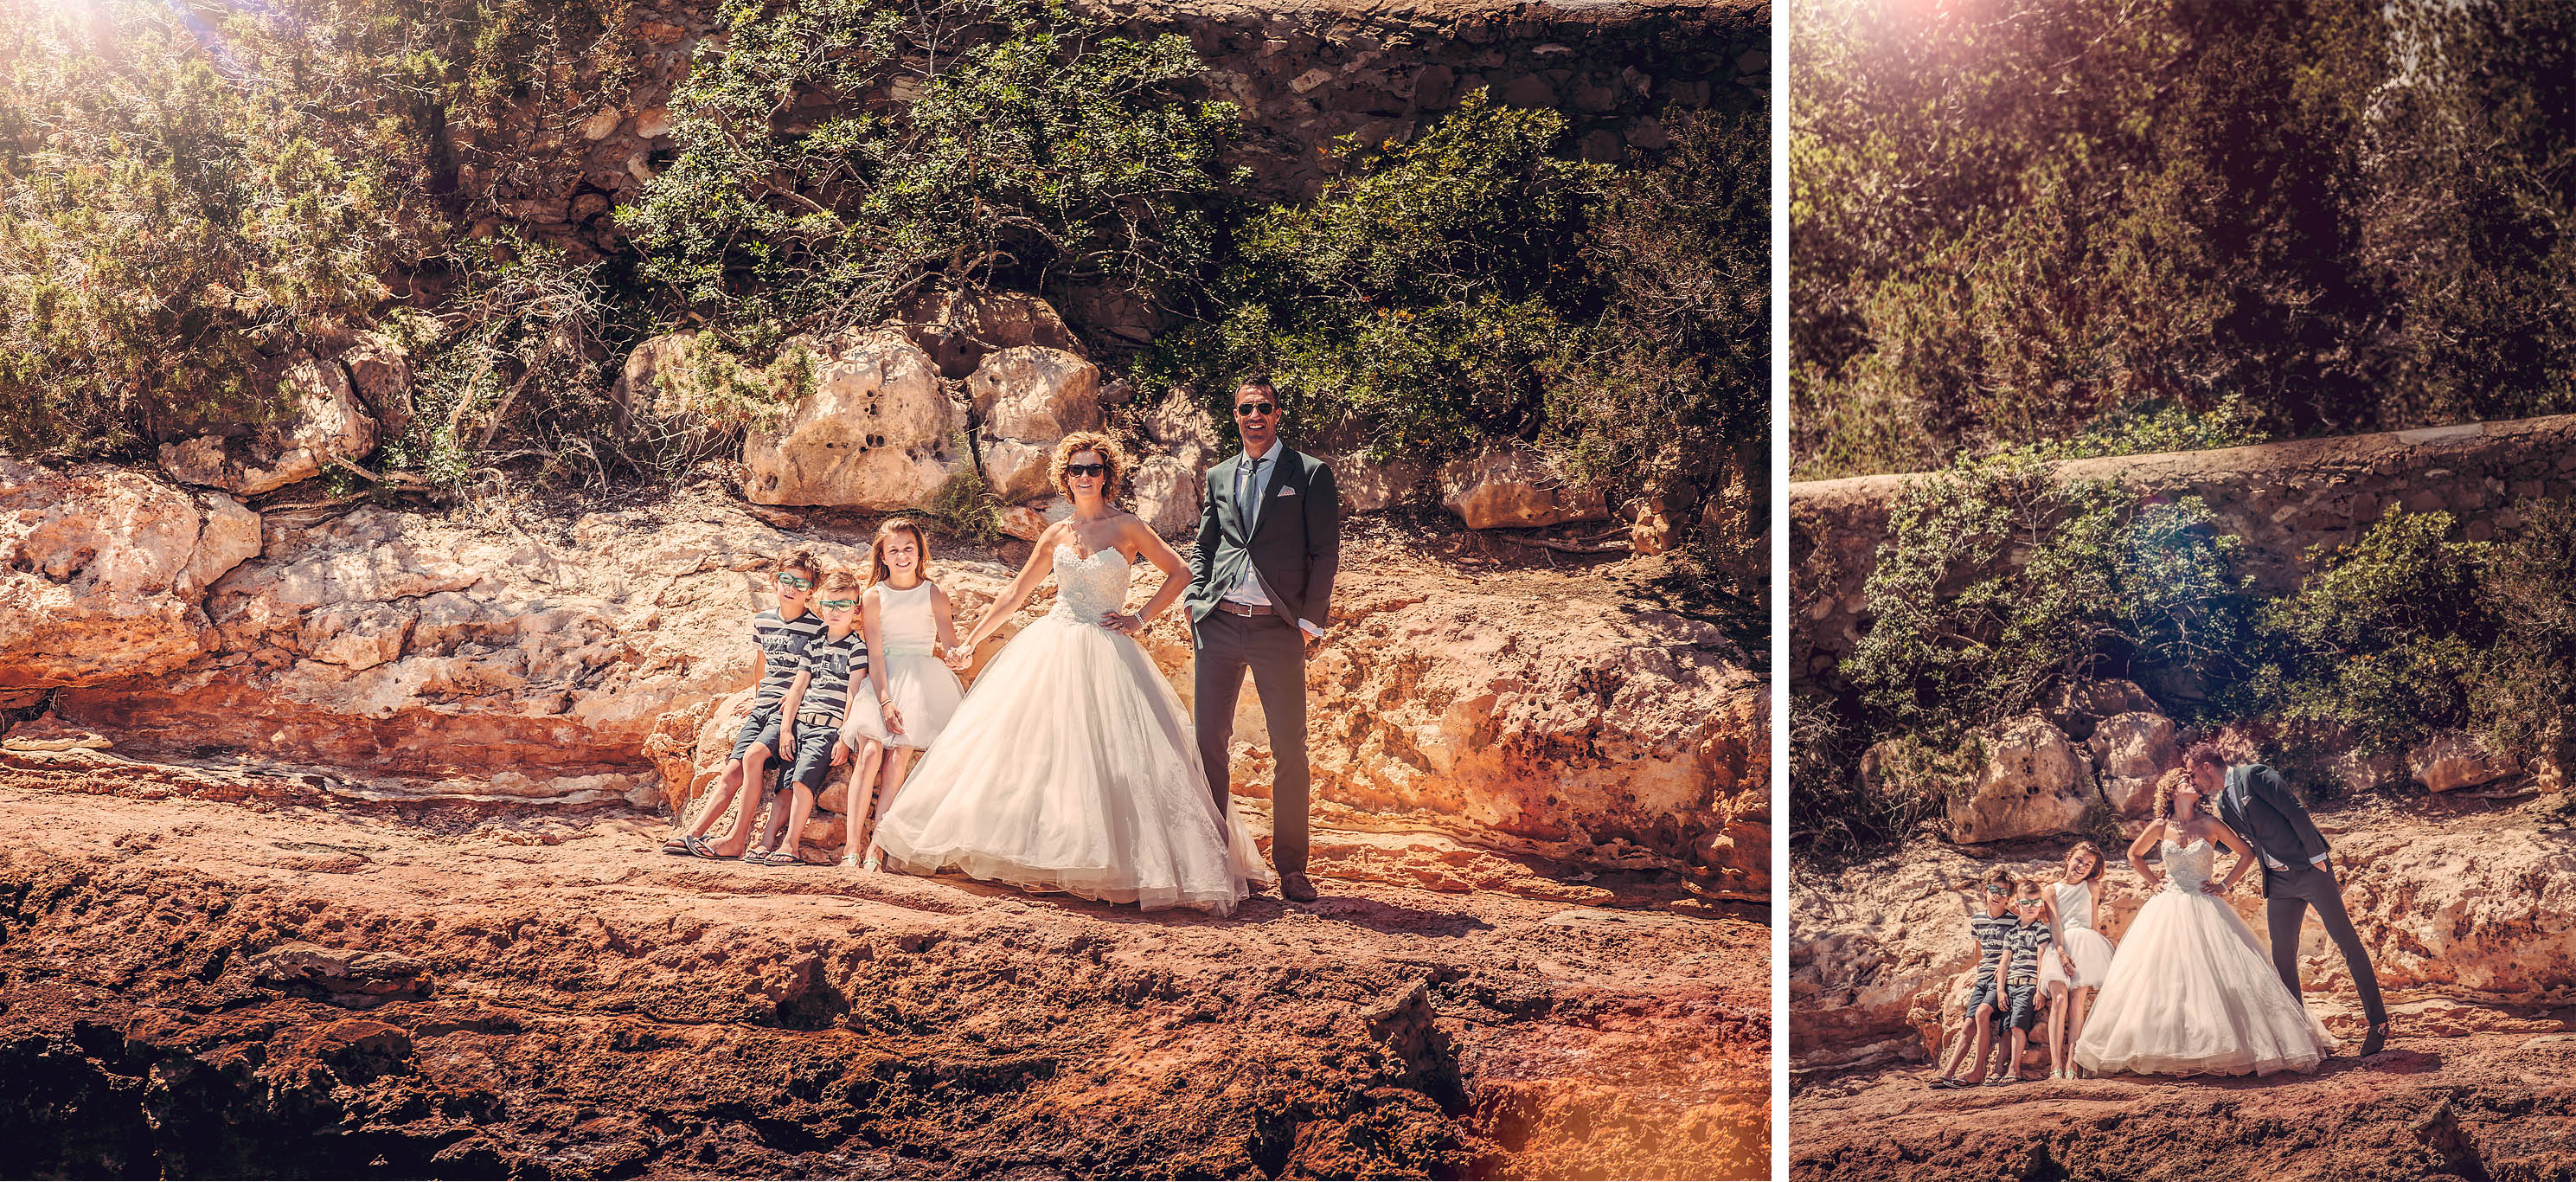 Bruidsreportage Destination Wedding Ibiza Mandy en Joost 017 - Bas Driessen Fotografie